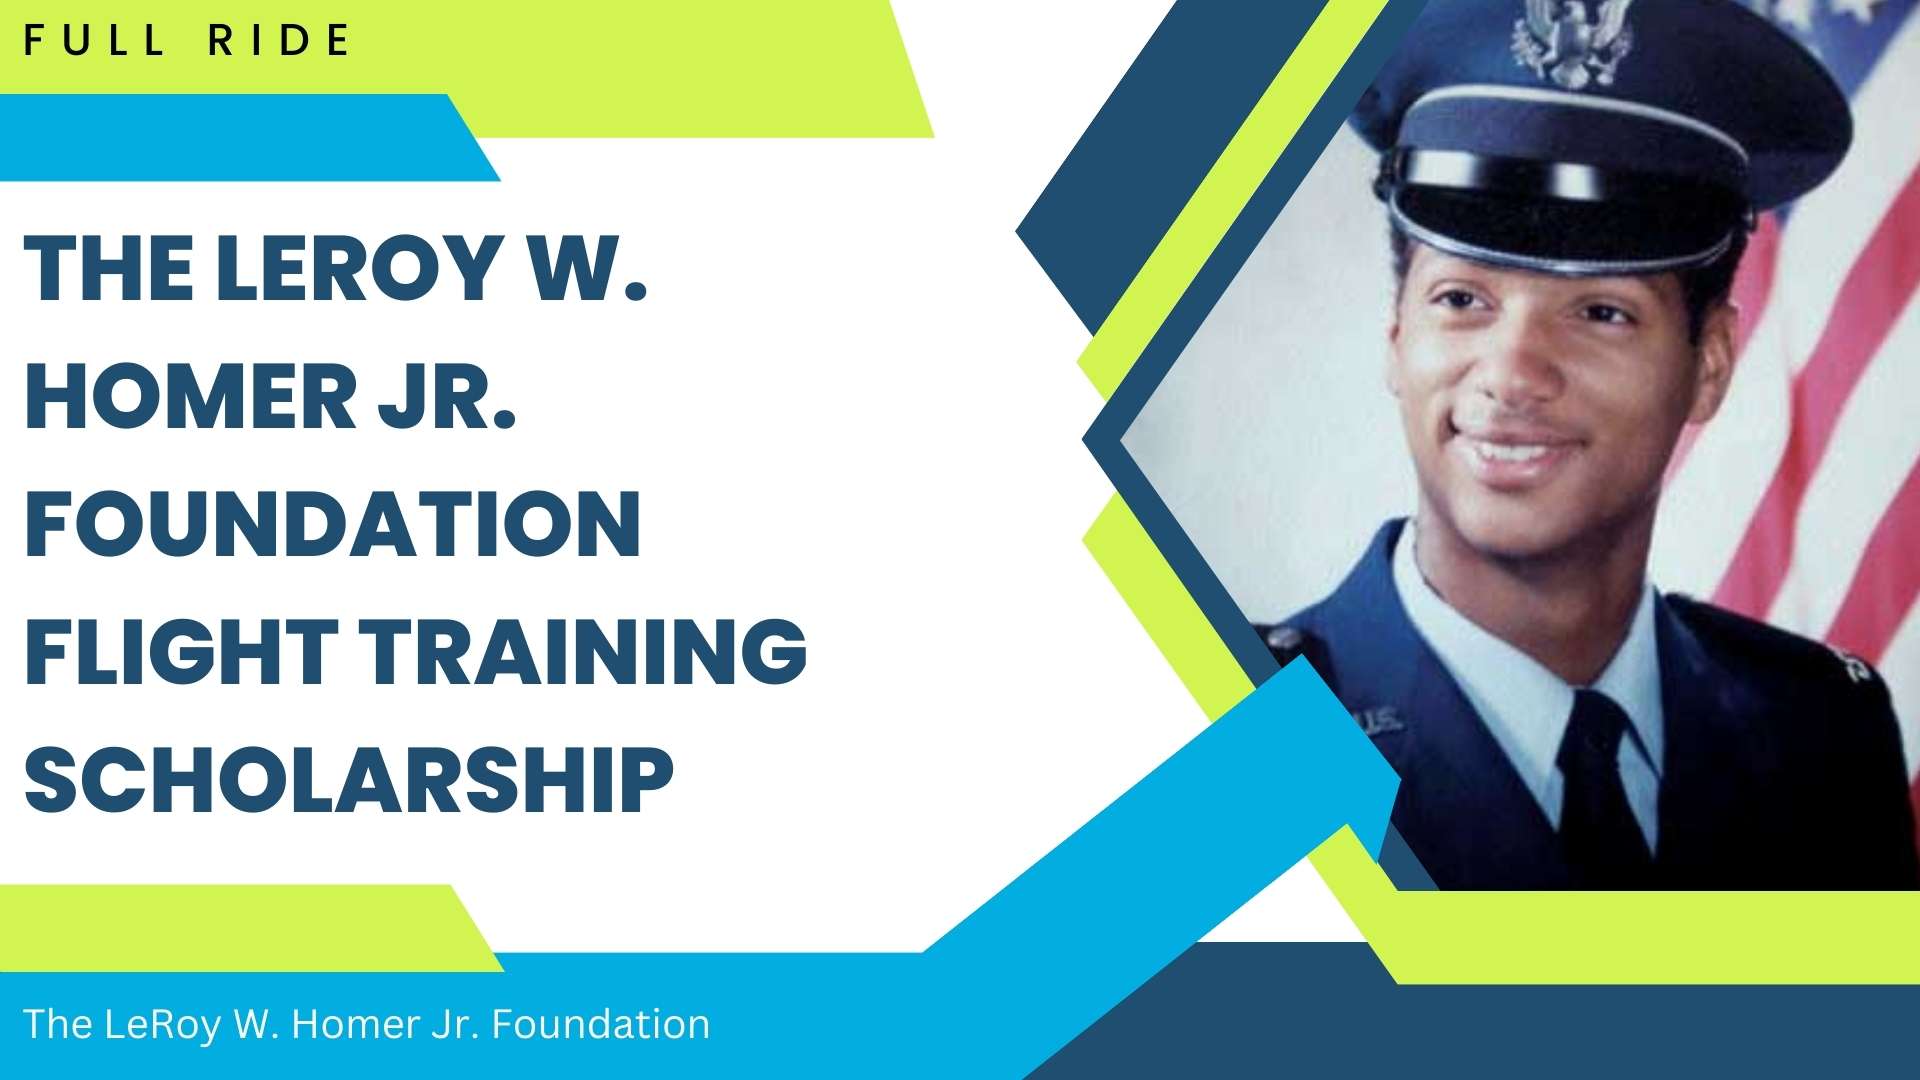 The LeRoy W. Homer Jr. Foundation Flight Training Scholarship